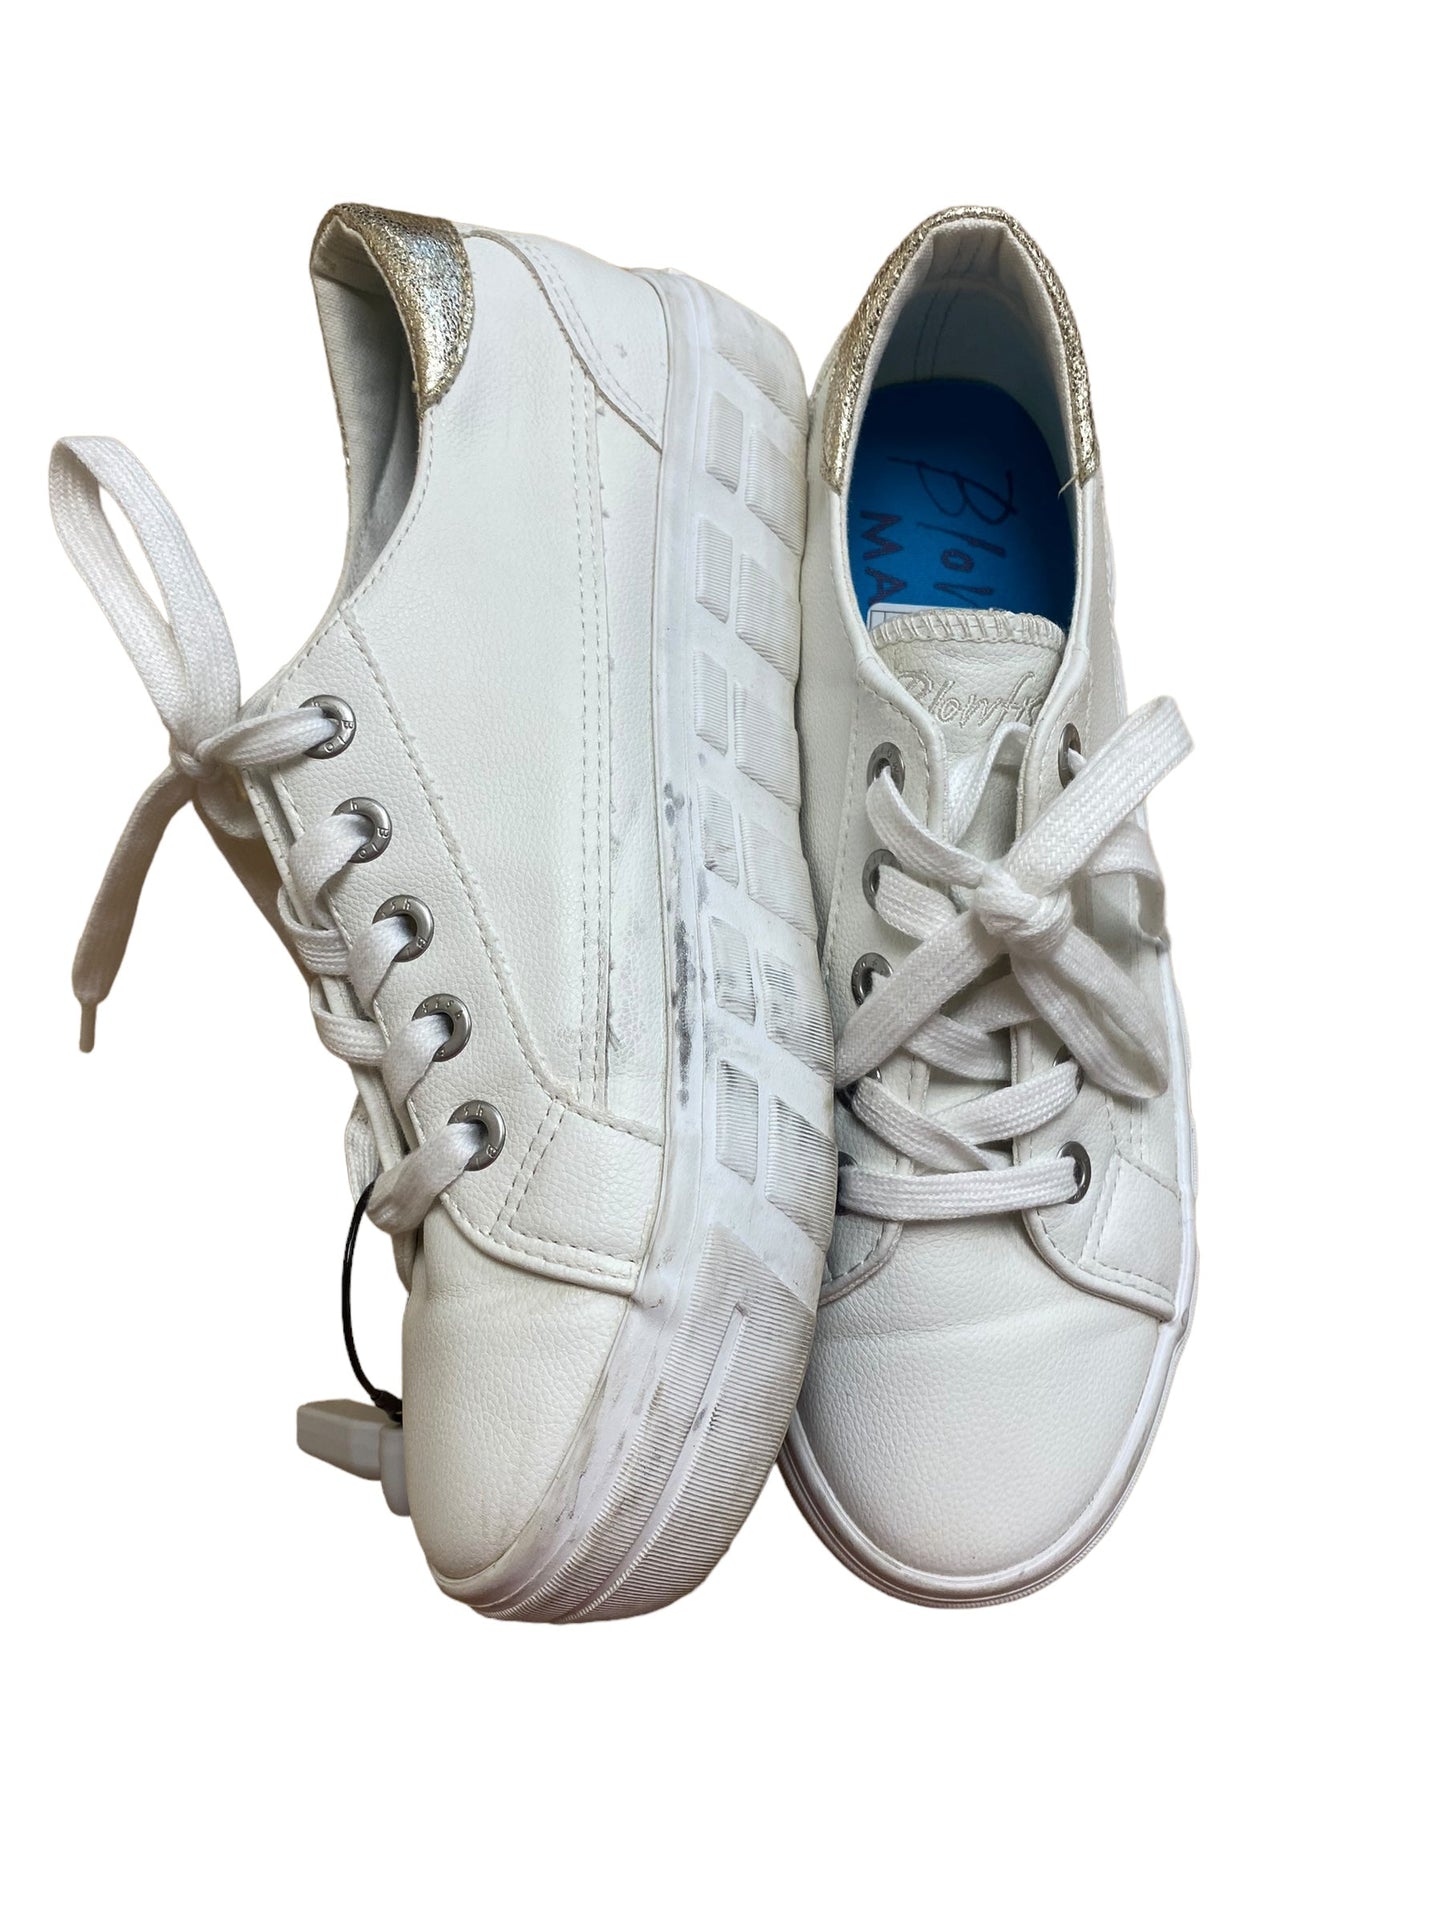 White Shoes Flats Blowfish, Size 10